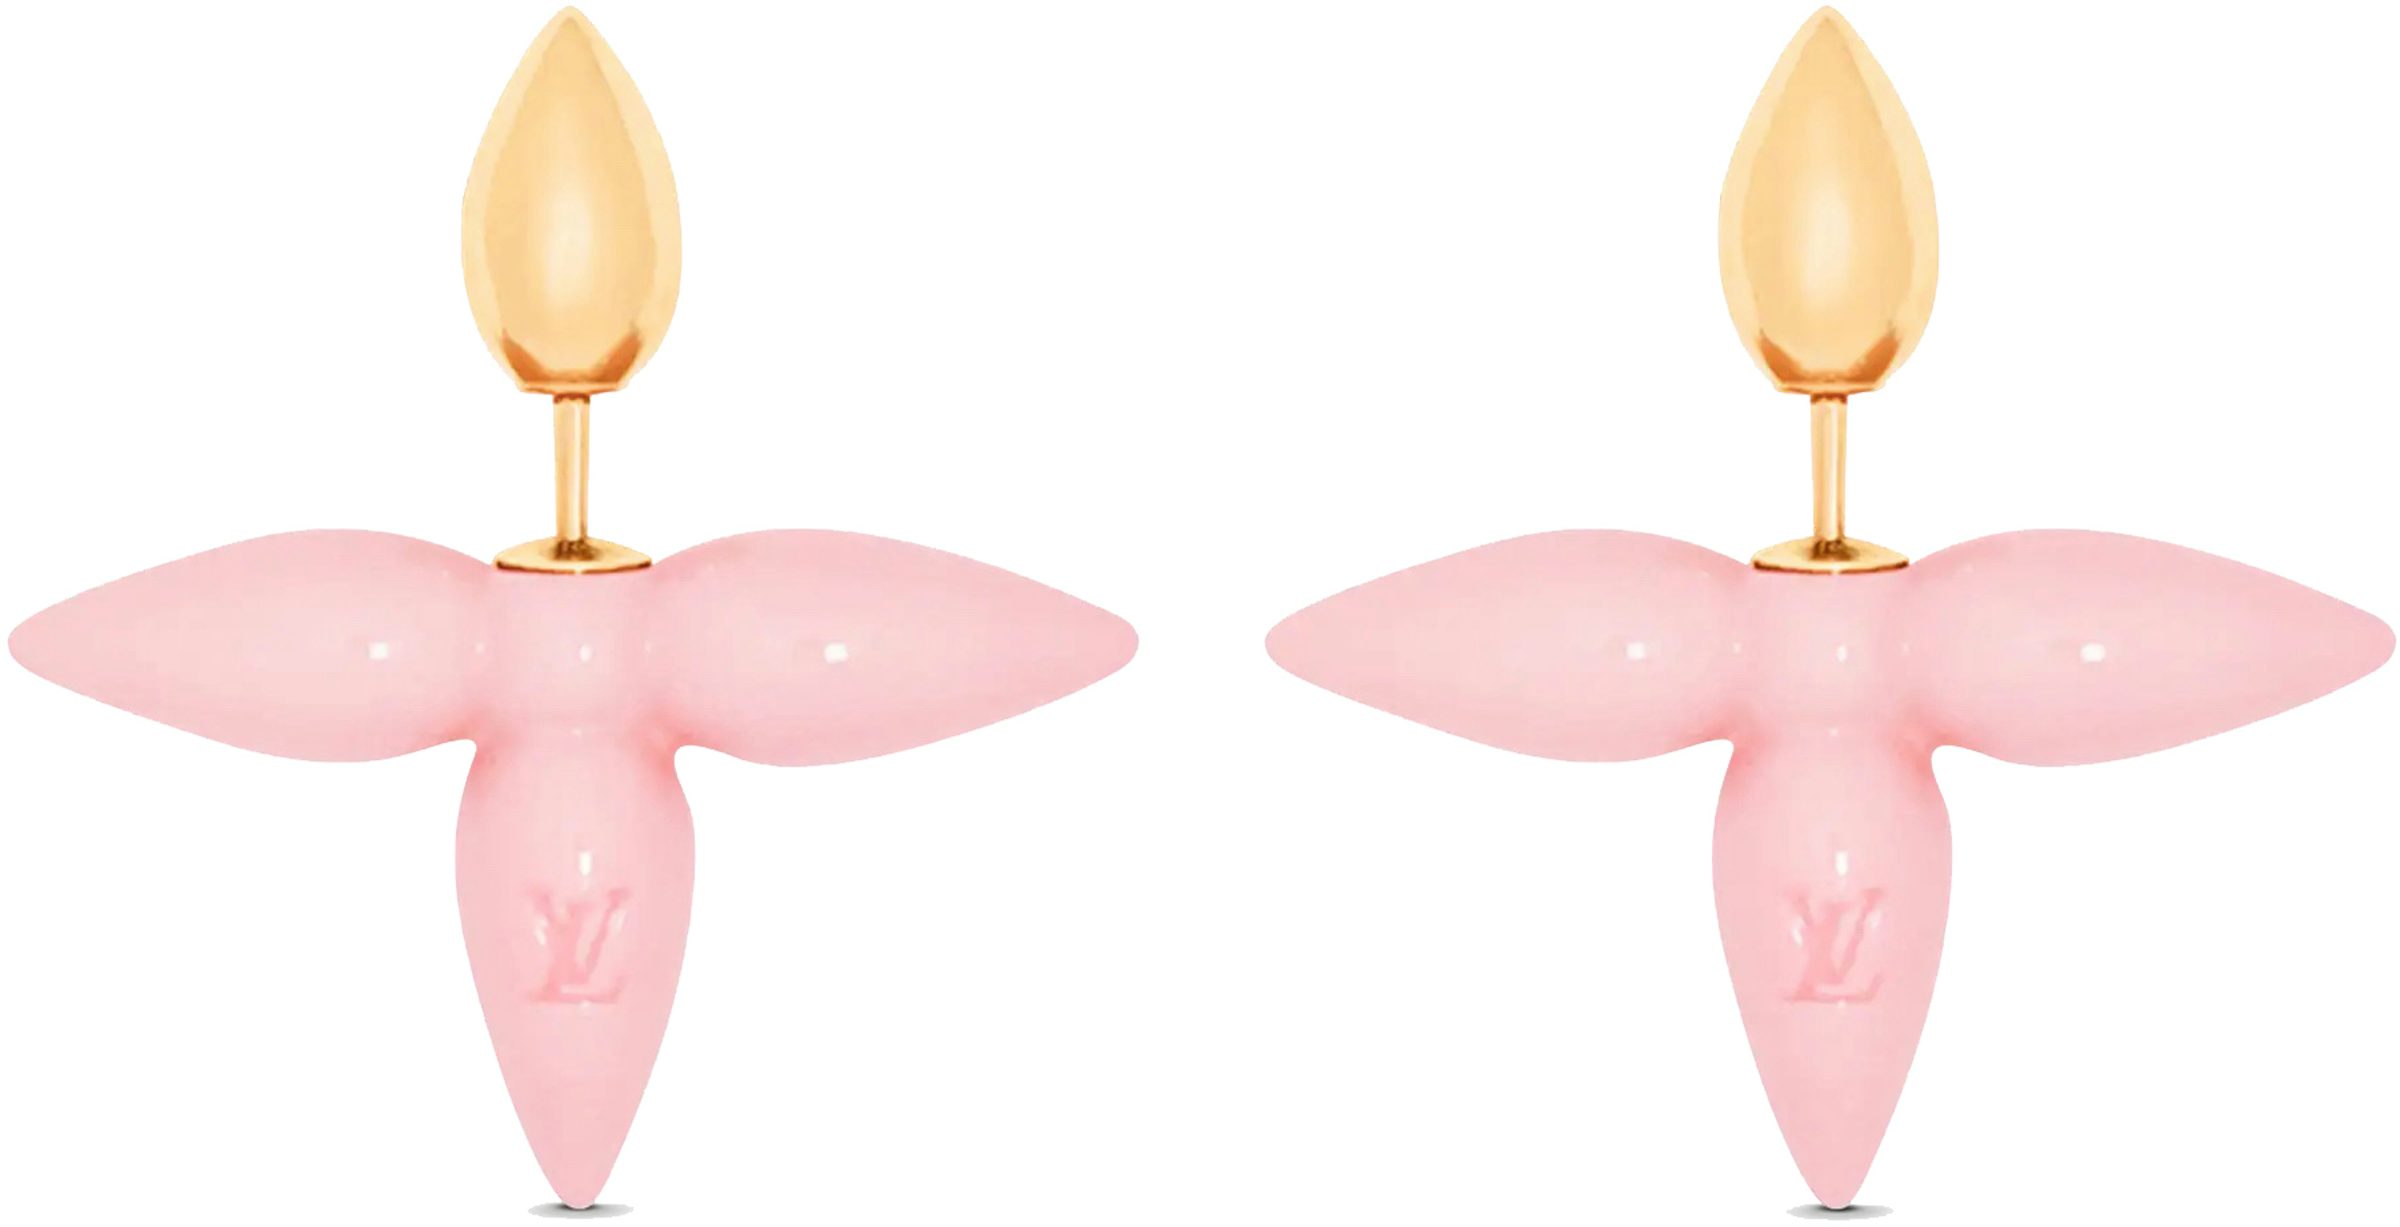 Louis Vuitton Louisette Earrings Light Pink/White in Gold Metal - GB